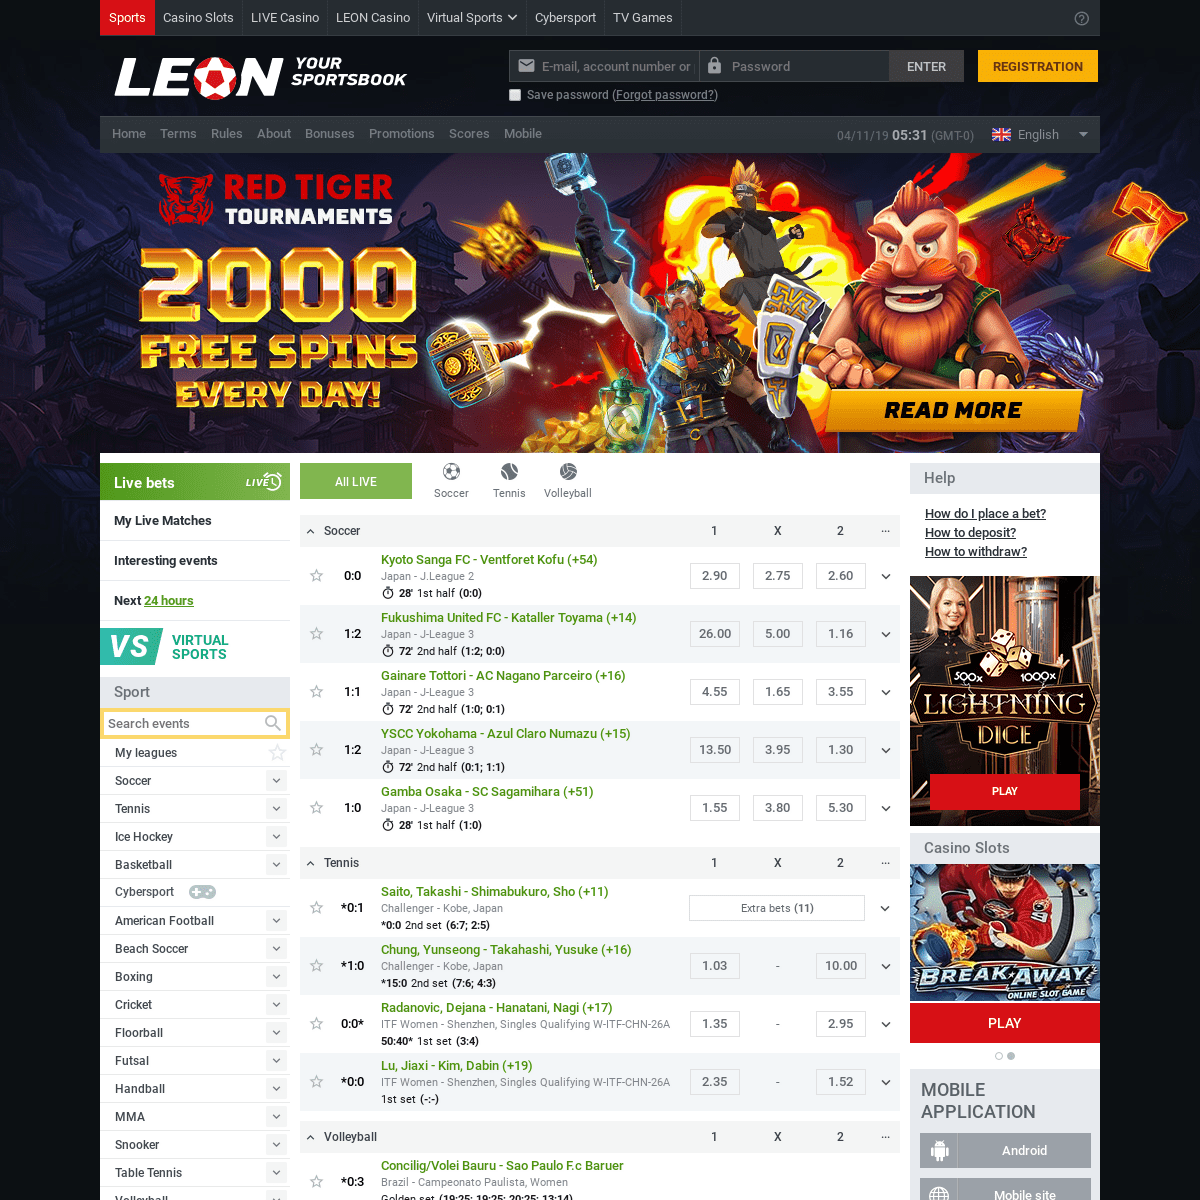 A complete backup of leonbets.com